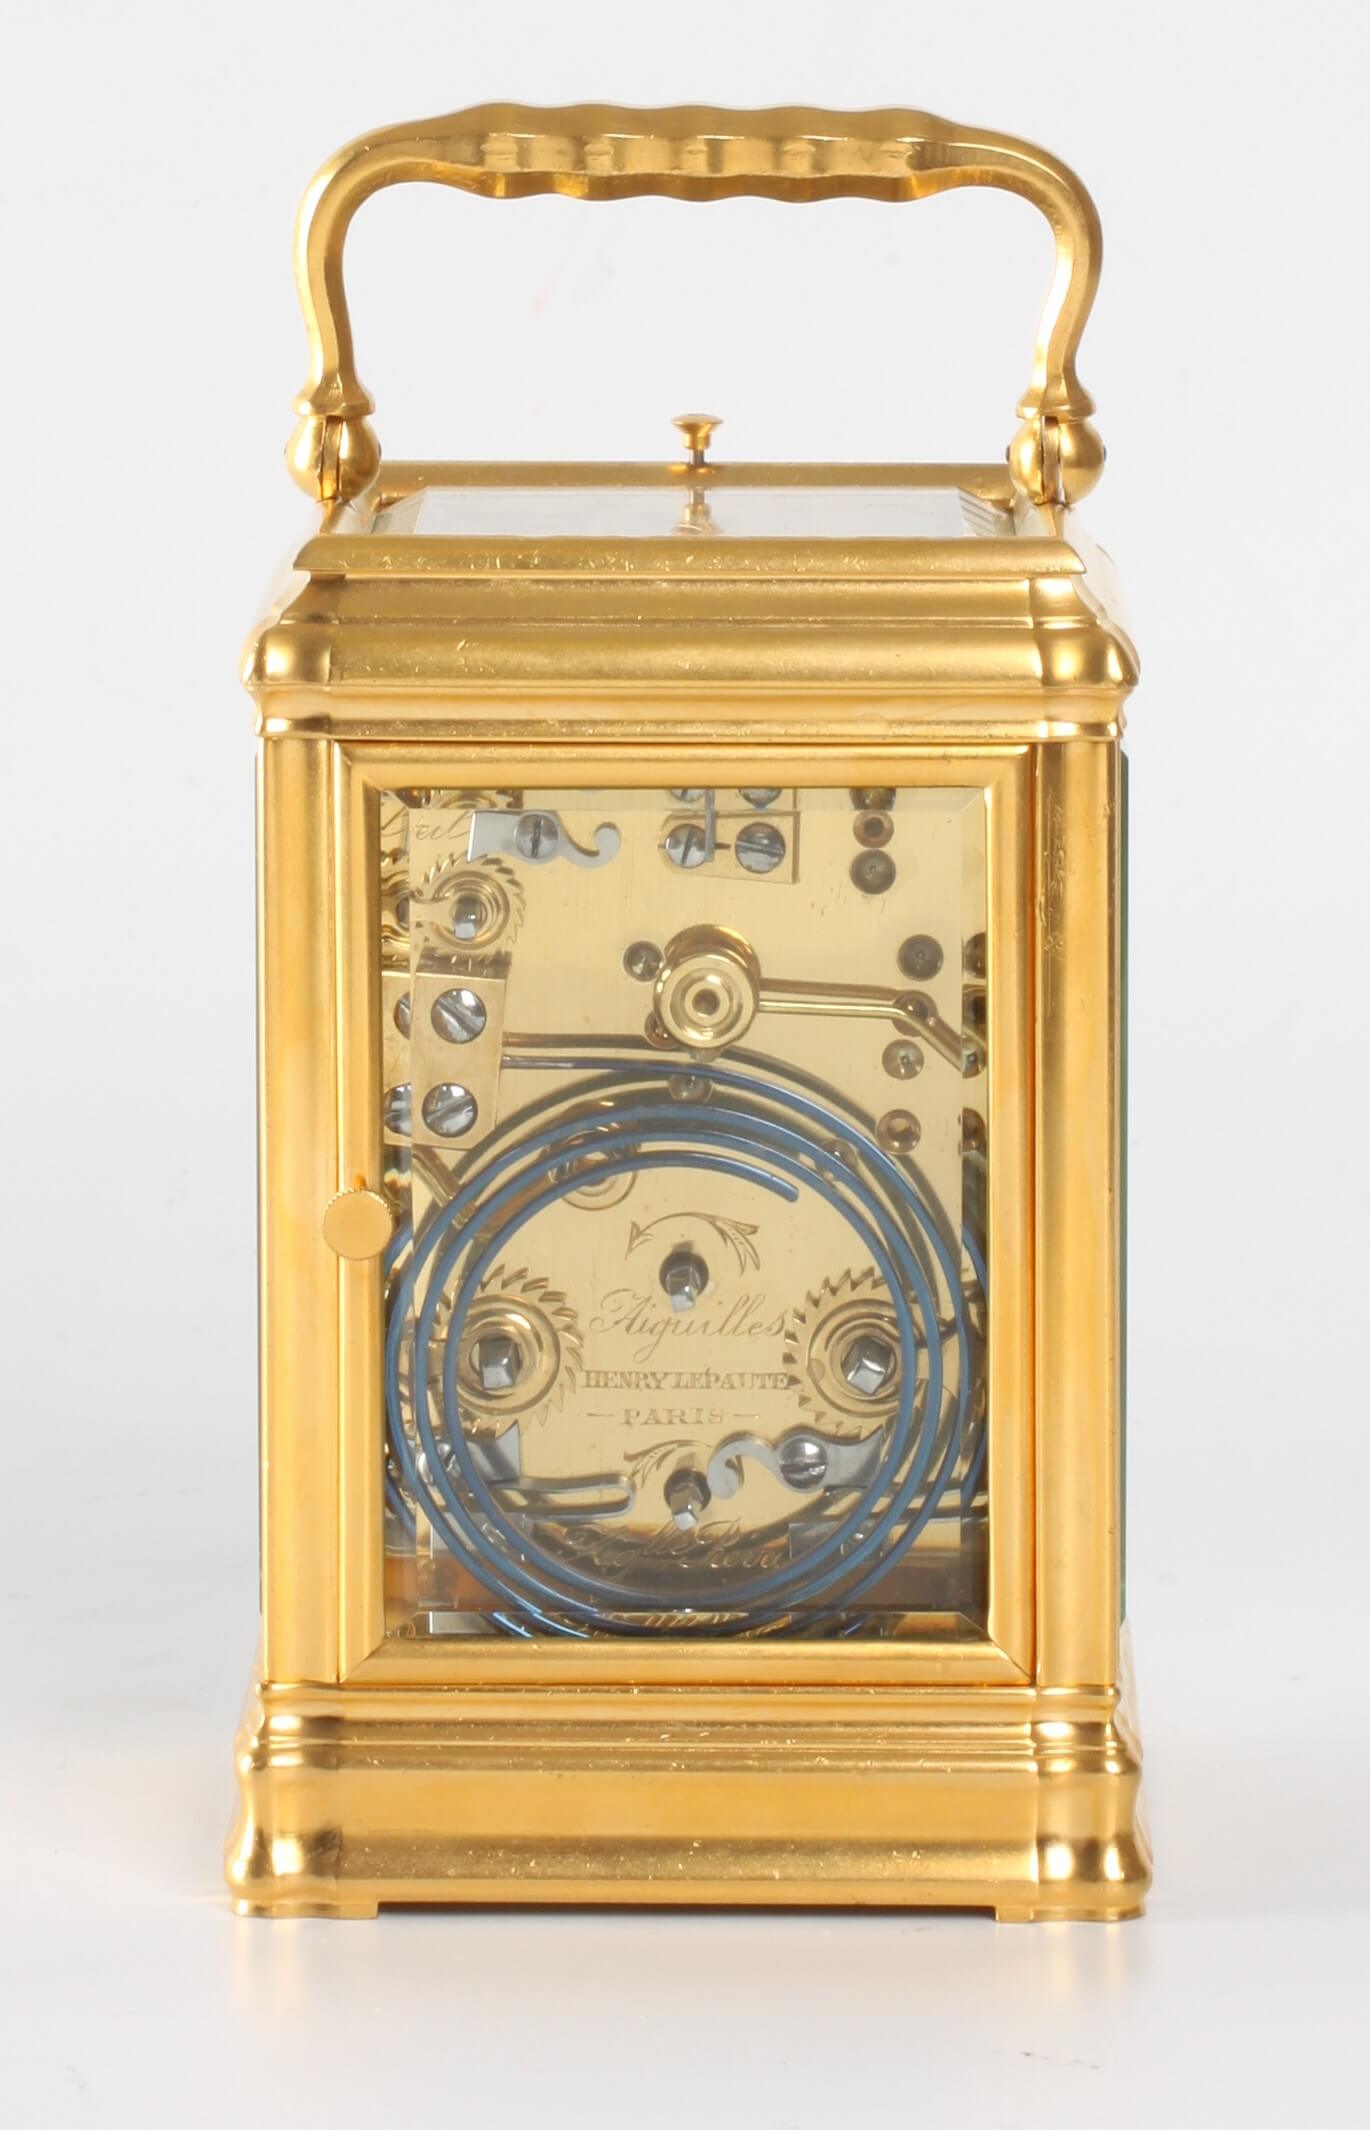 French gorge carriage clock Henri Lepaute 1880